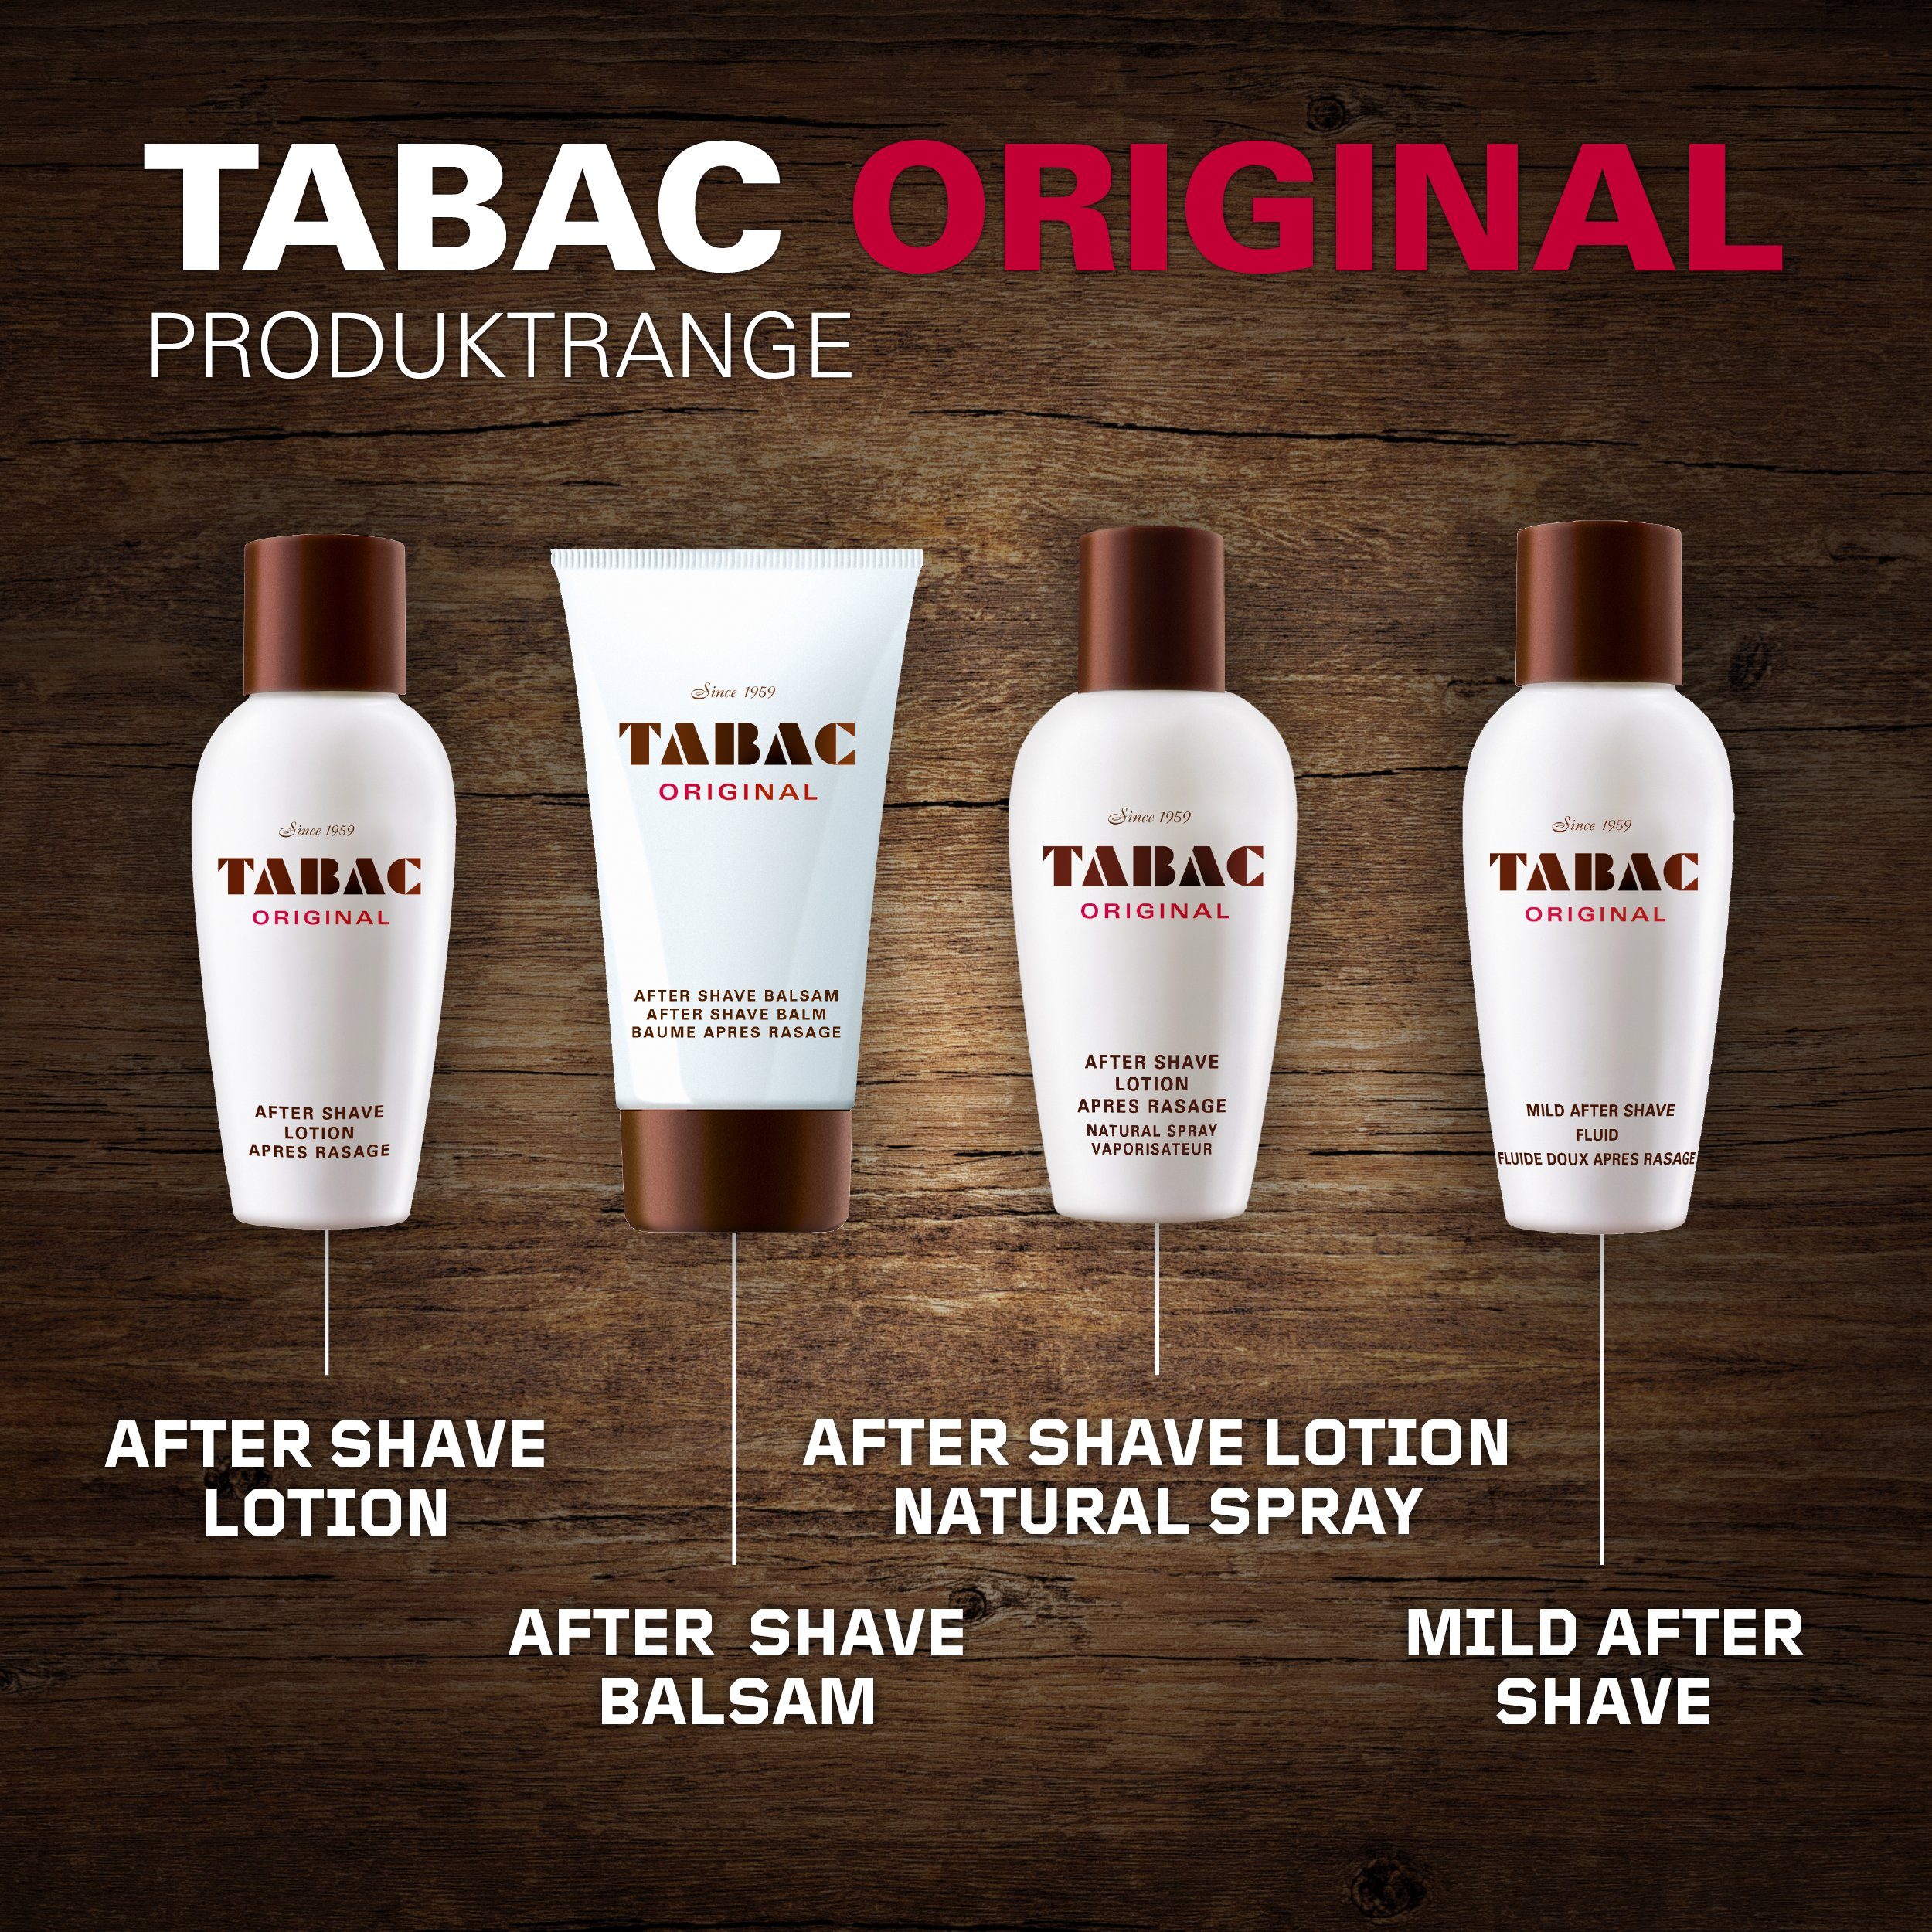 Tabac Original Gesichts-Reinigungslotion Tabac ml Shave Original Lotion After 300